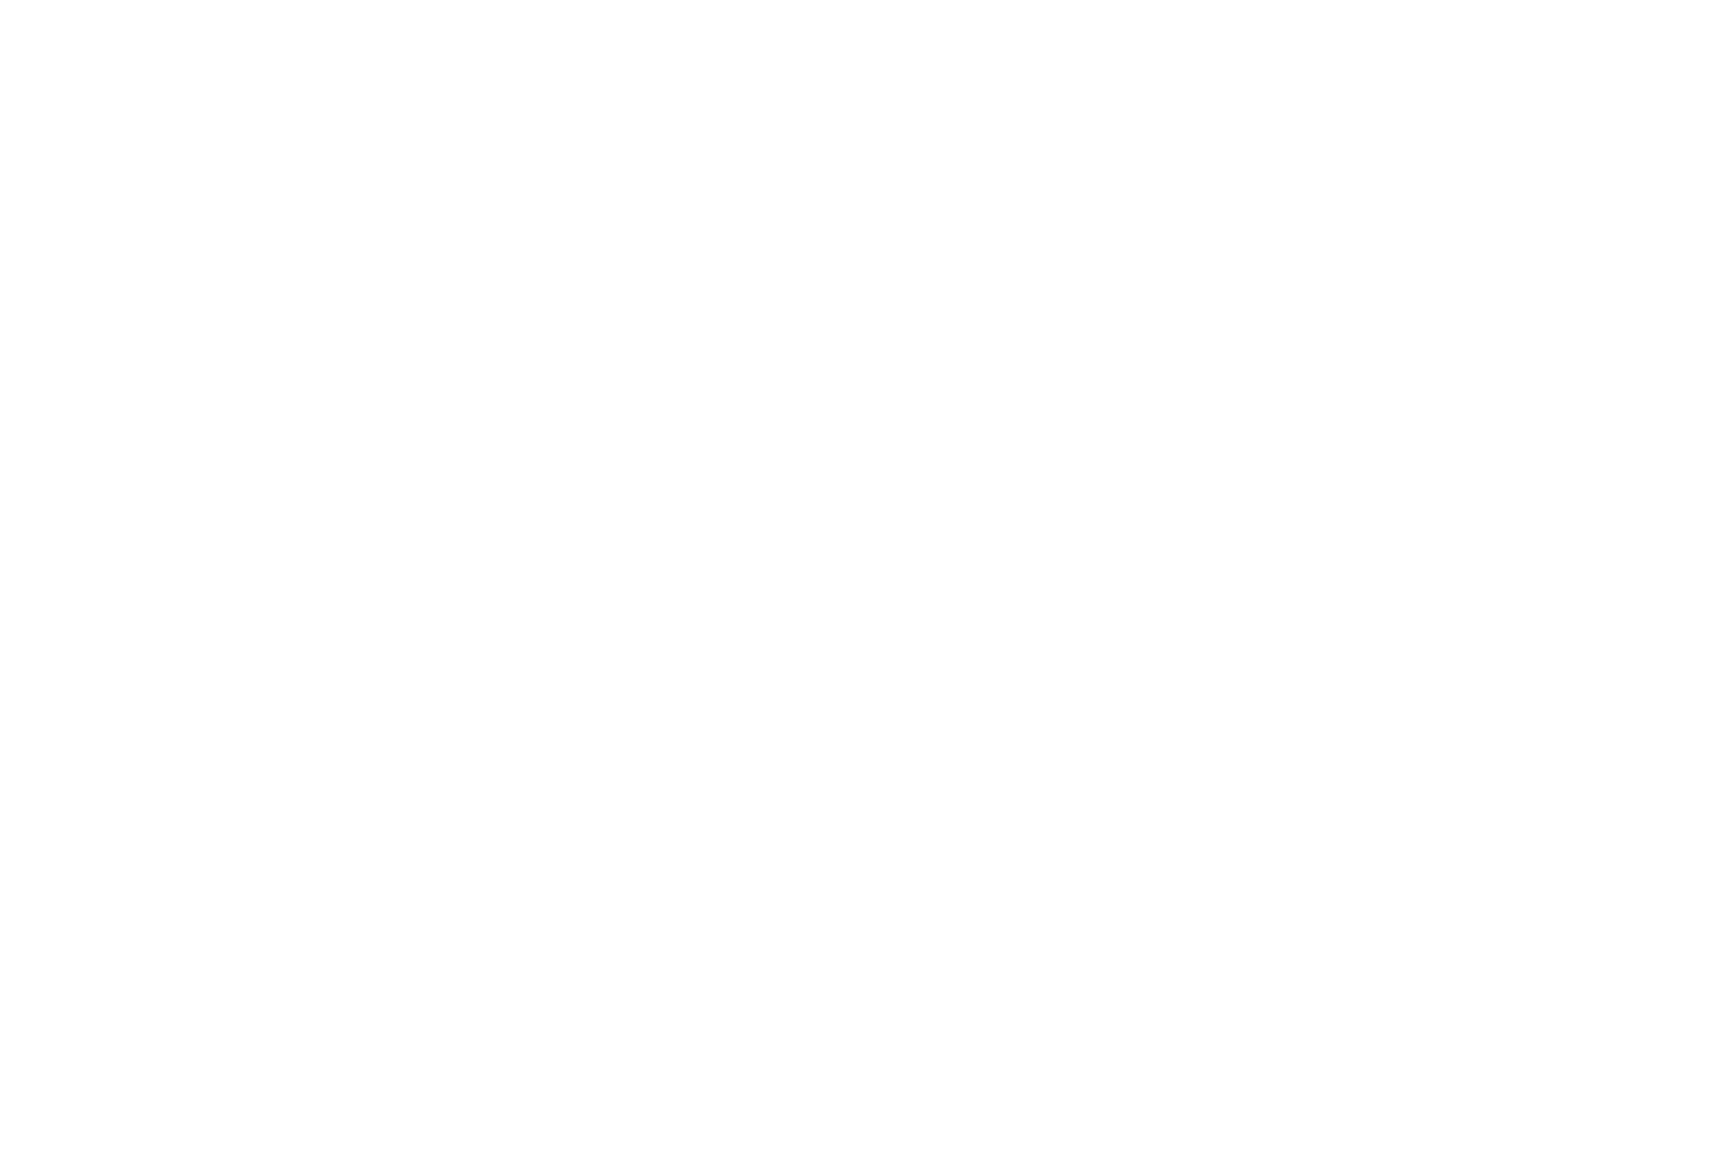 WINNER - Rome International Movie Awards - 2023